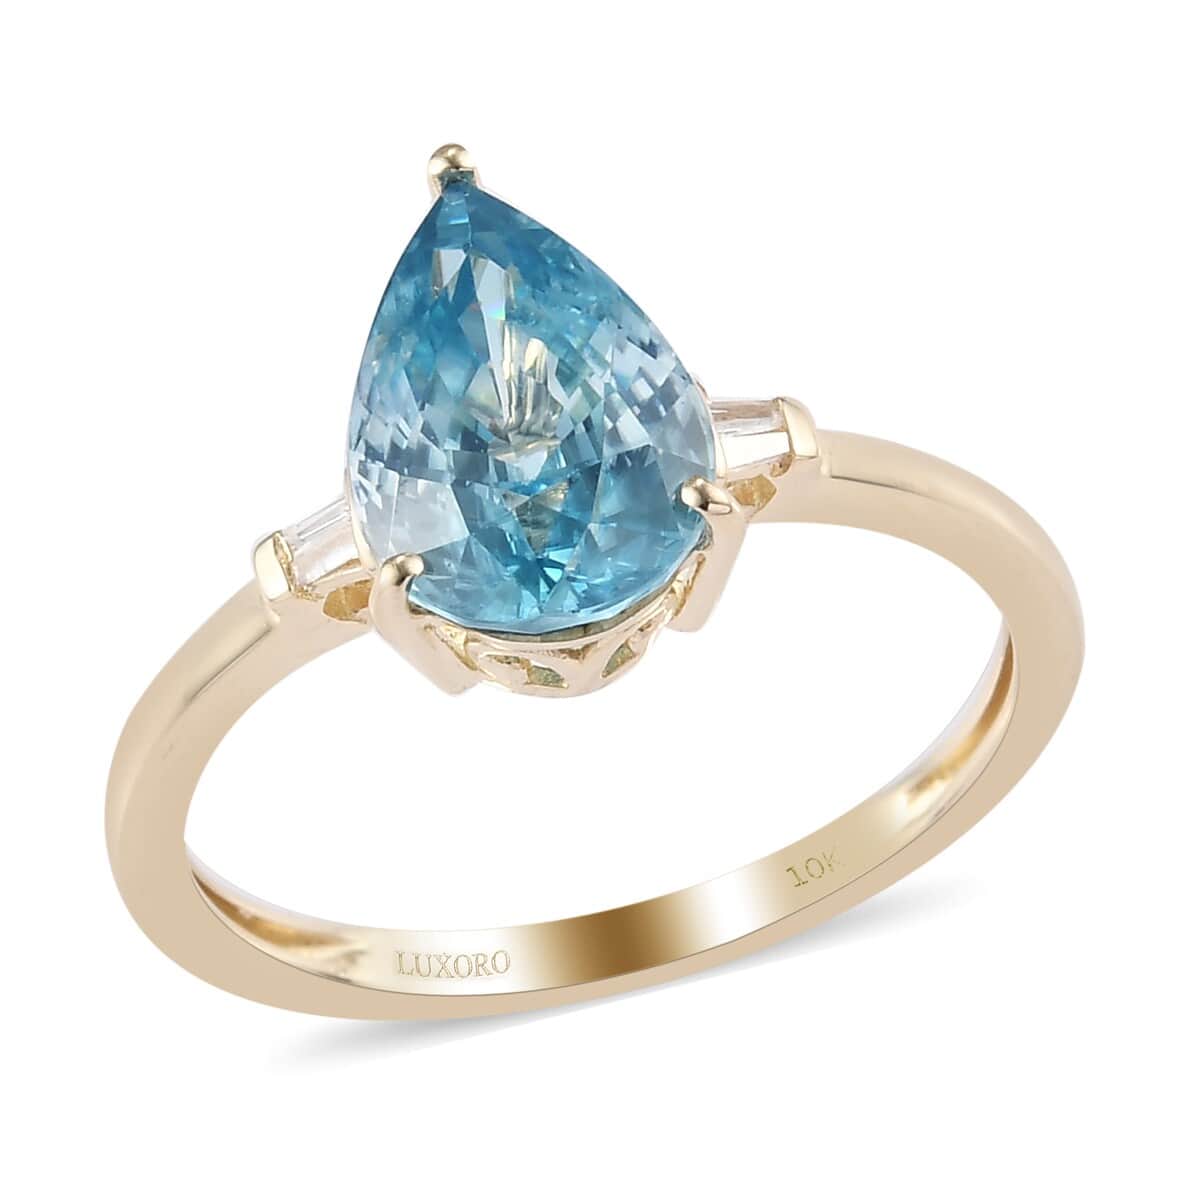 LUXORO Premium Ratanakiri Blue Zircon and Diamond Ring in 10K Yellow Gold (Size 9.0) 2.90 ctw image number 0